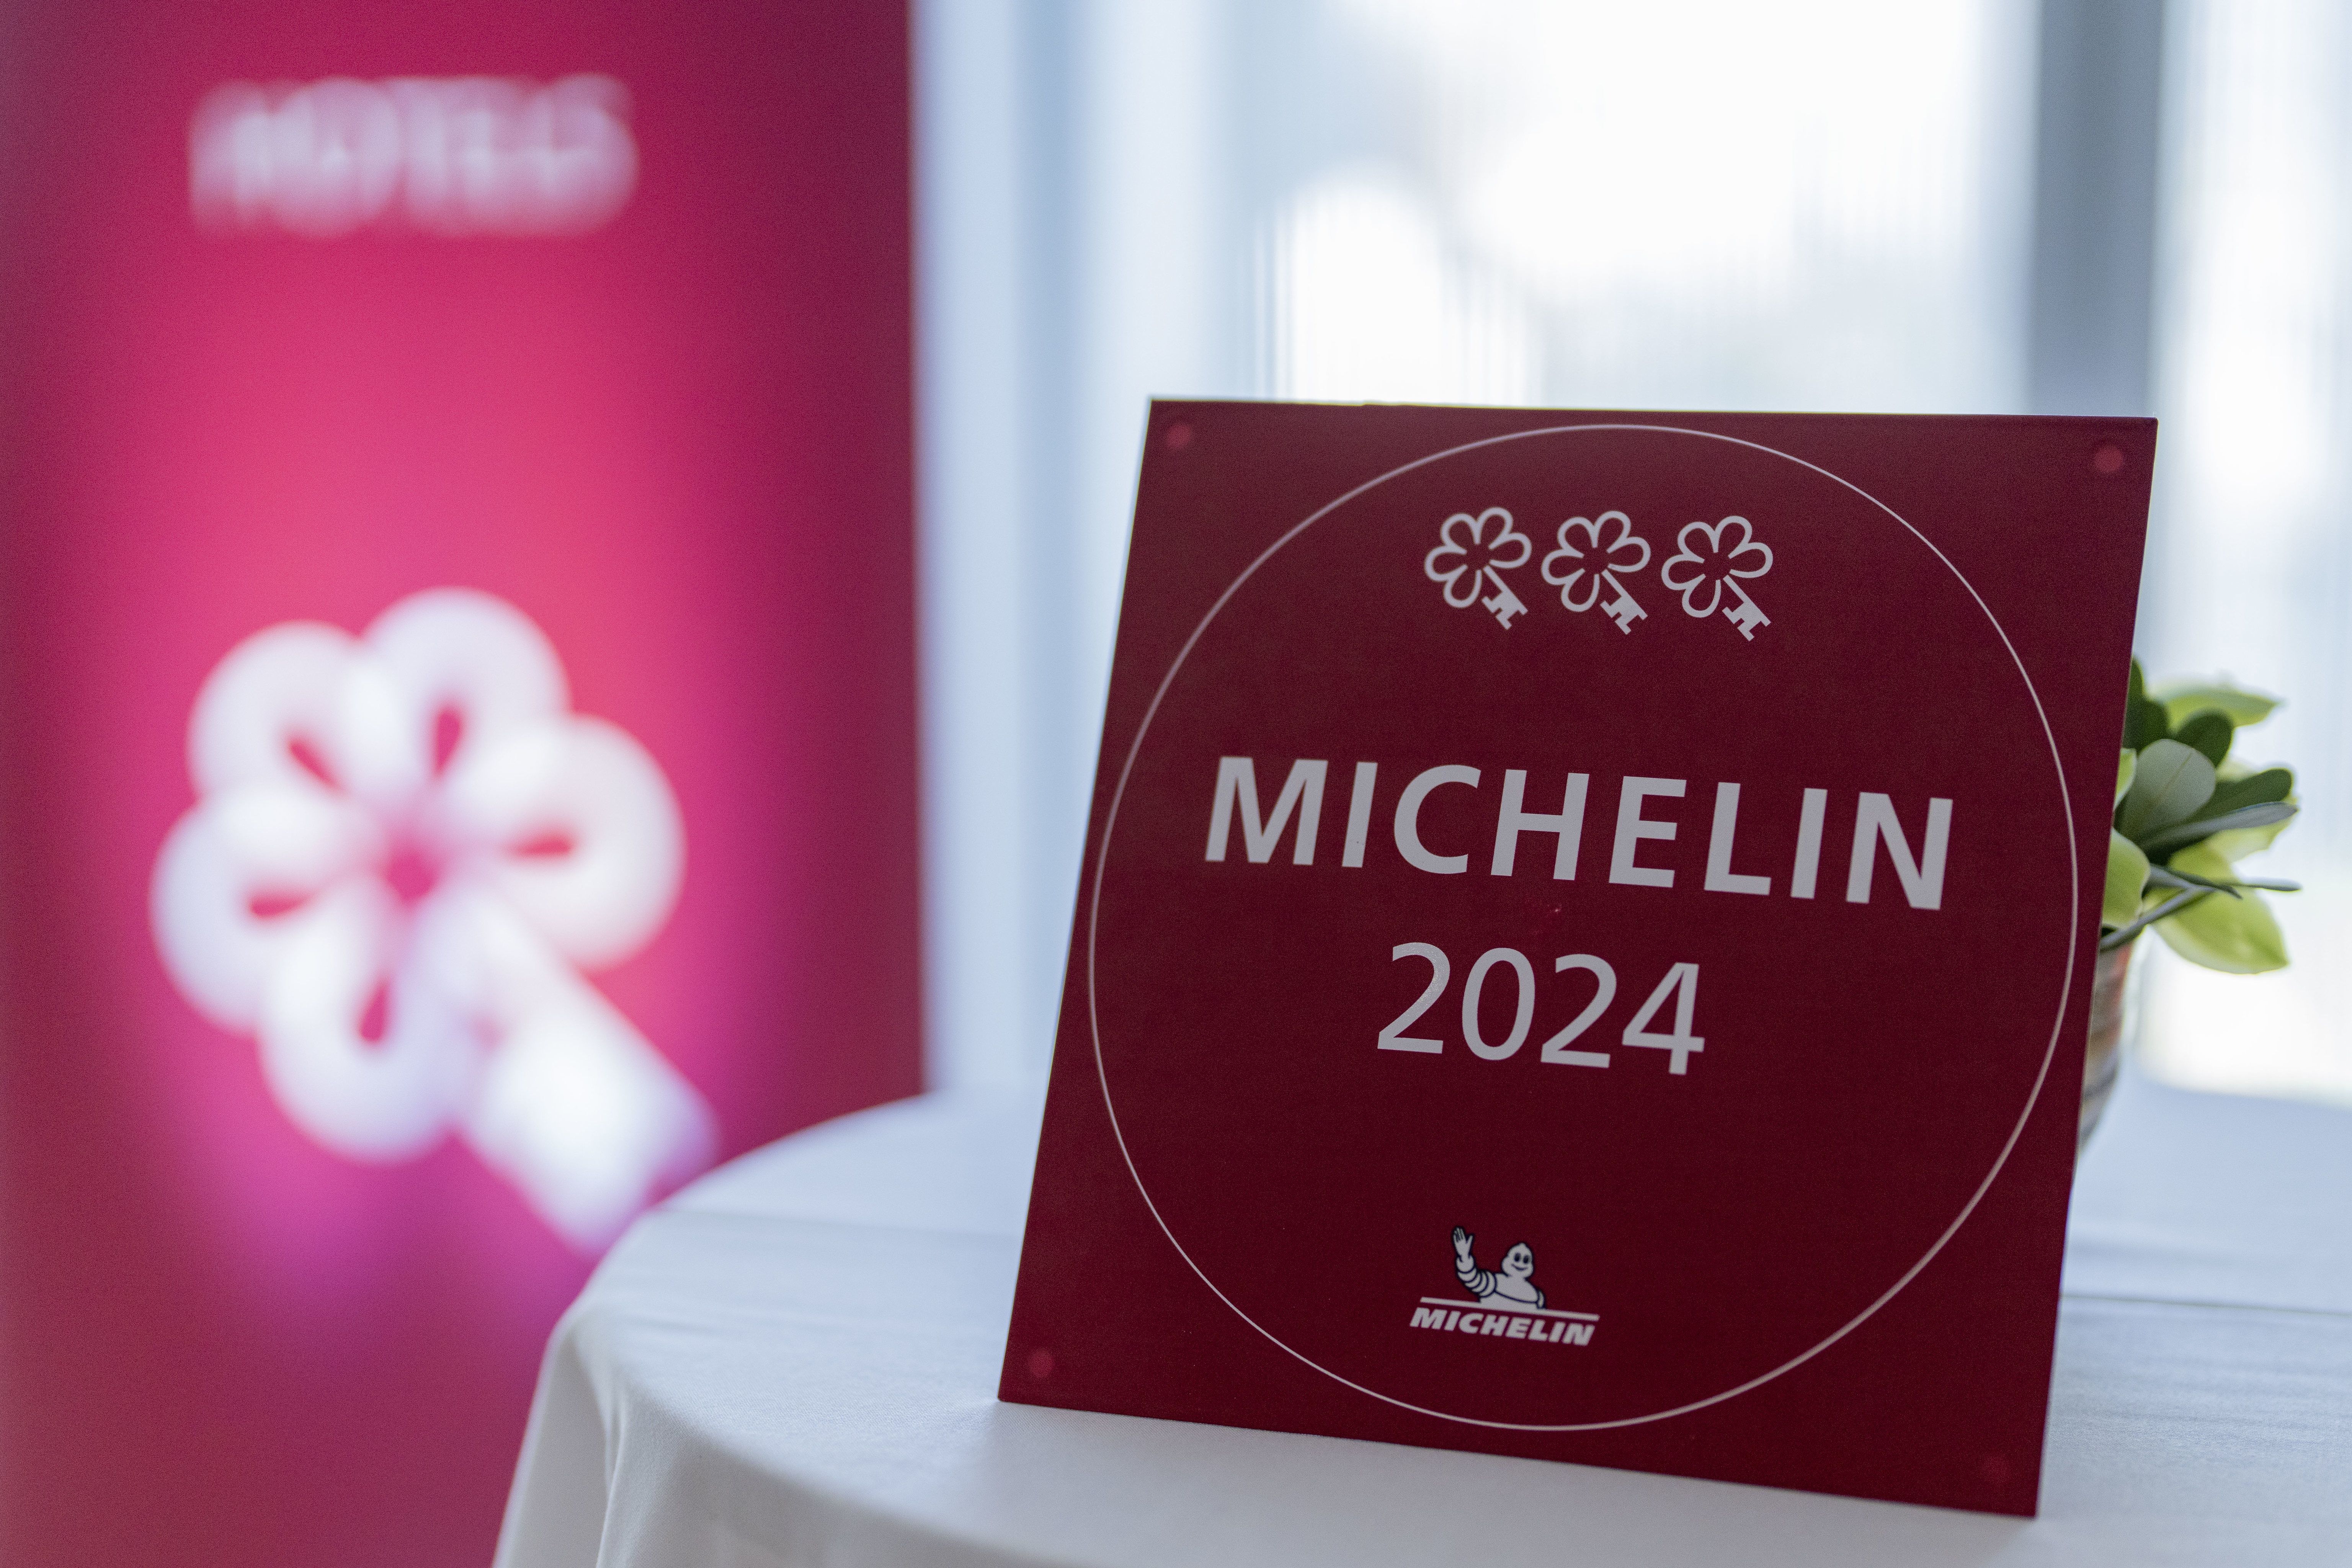 Un hotel català aconsegueix tres claus Michelin